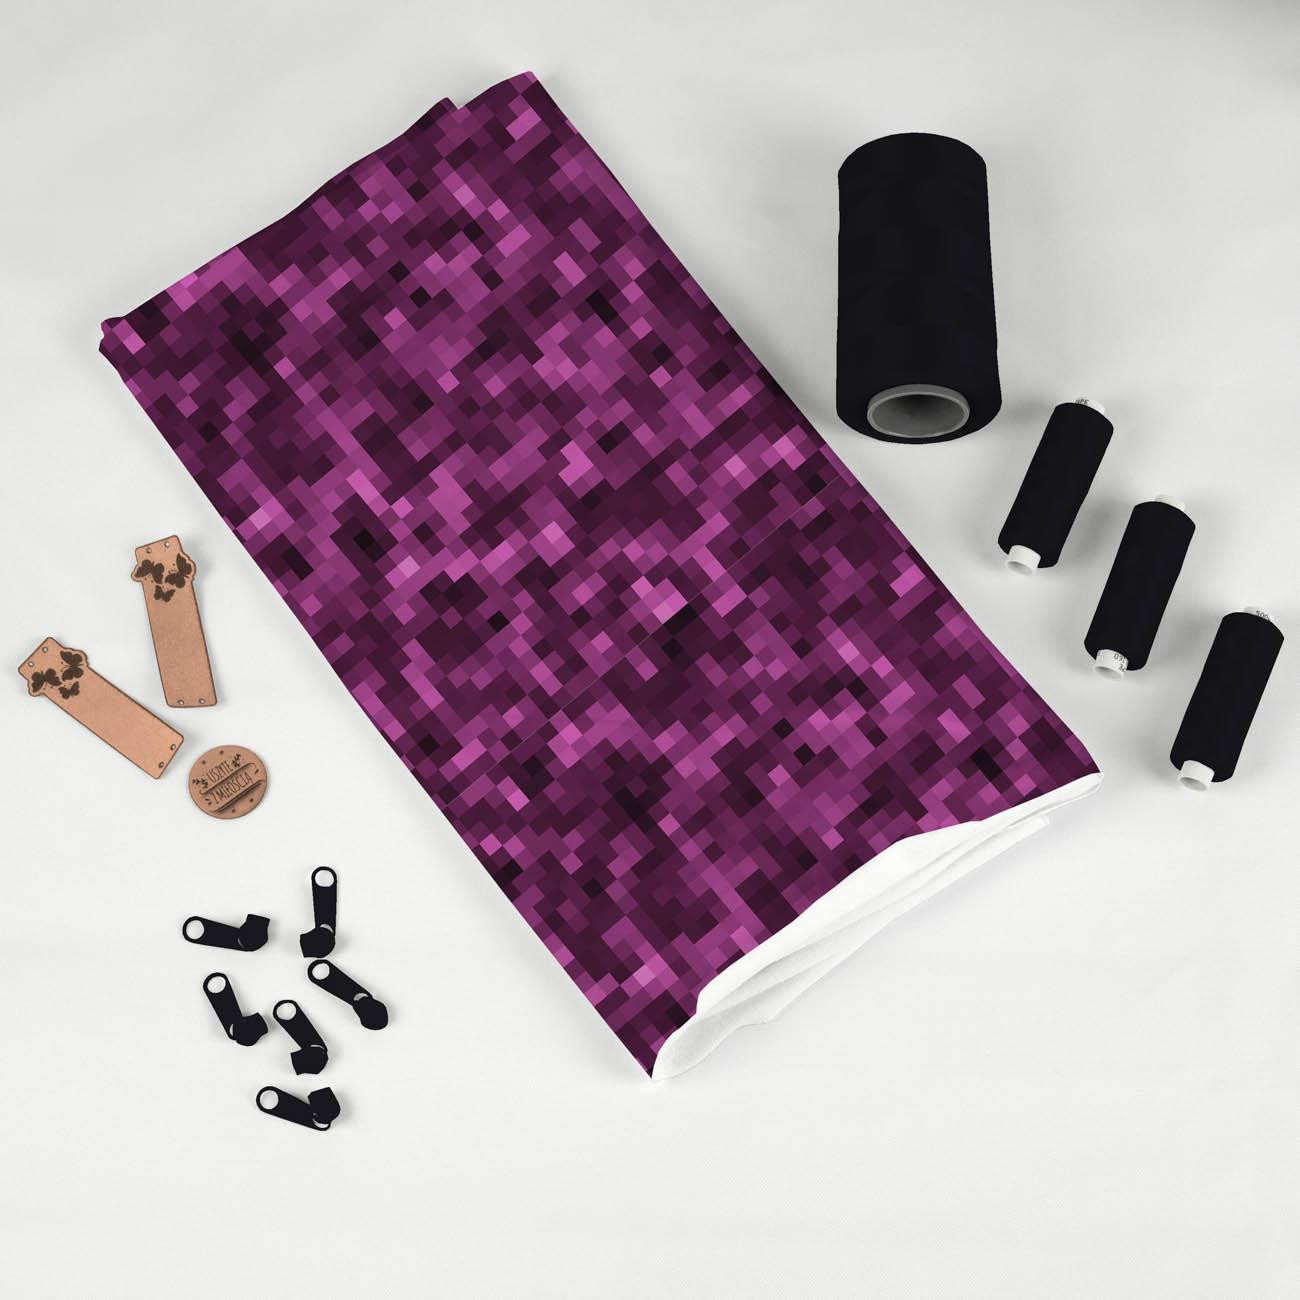 PIXELS pat. 2 / purple  - looped knit fabric